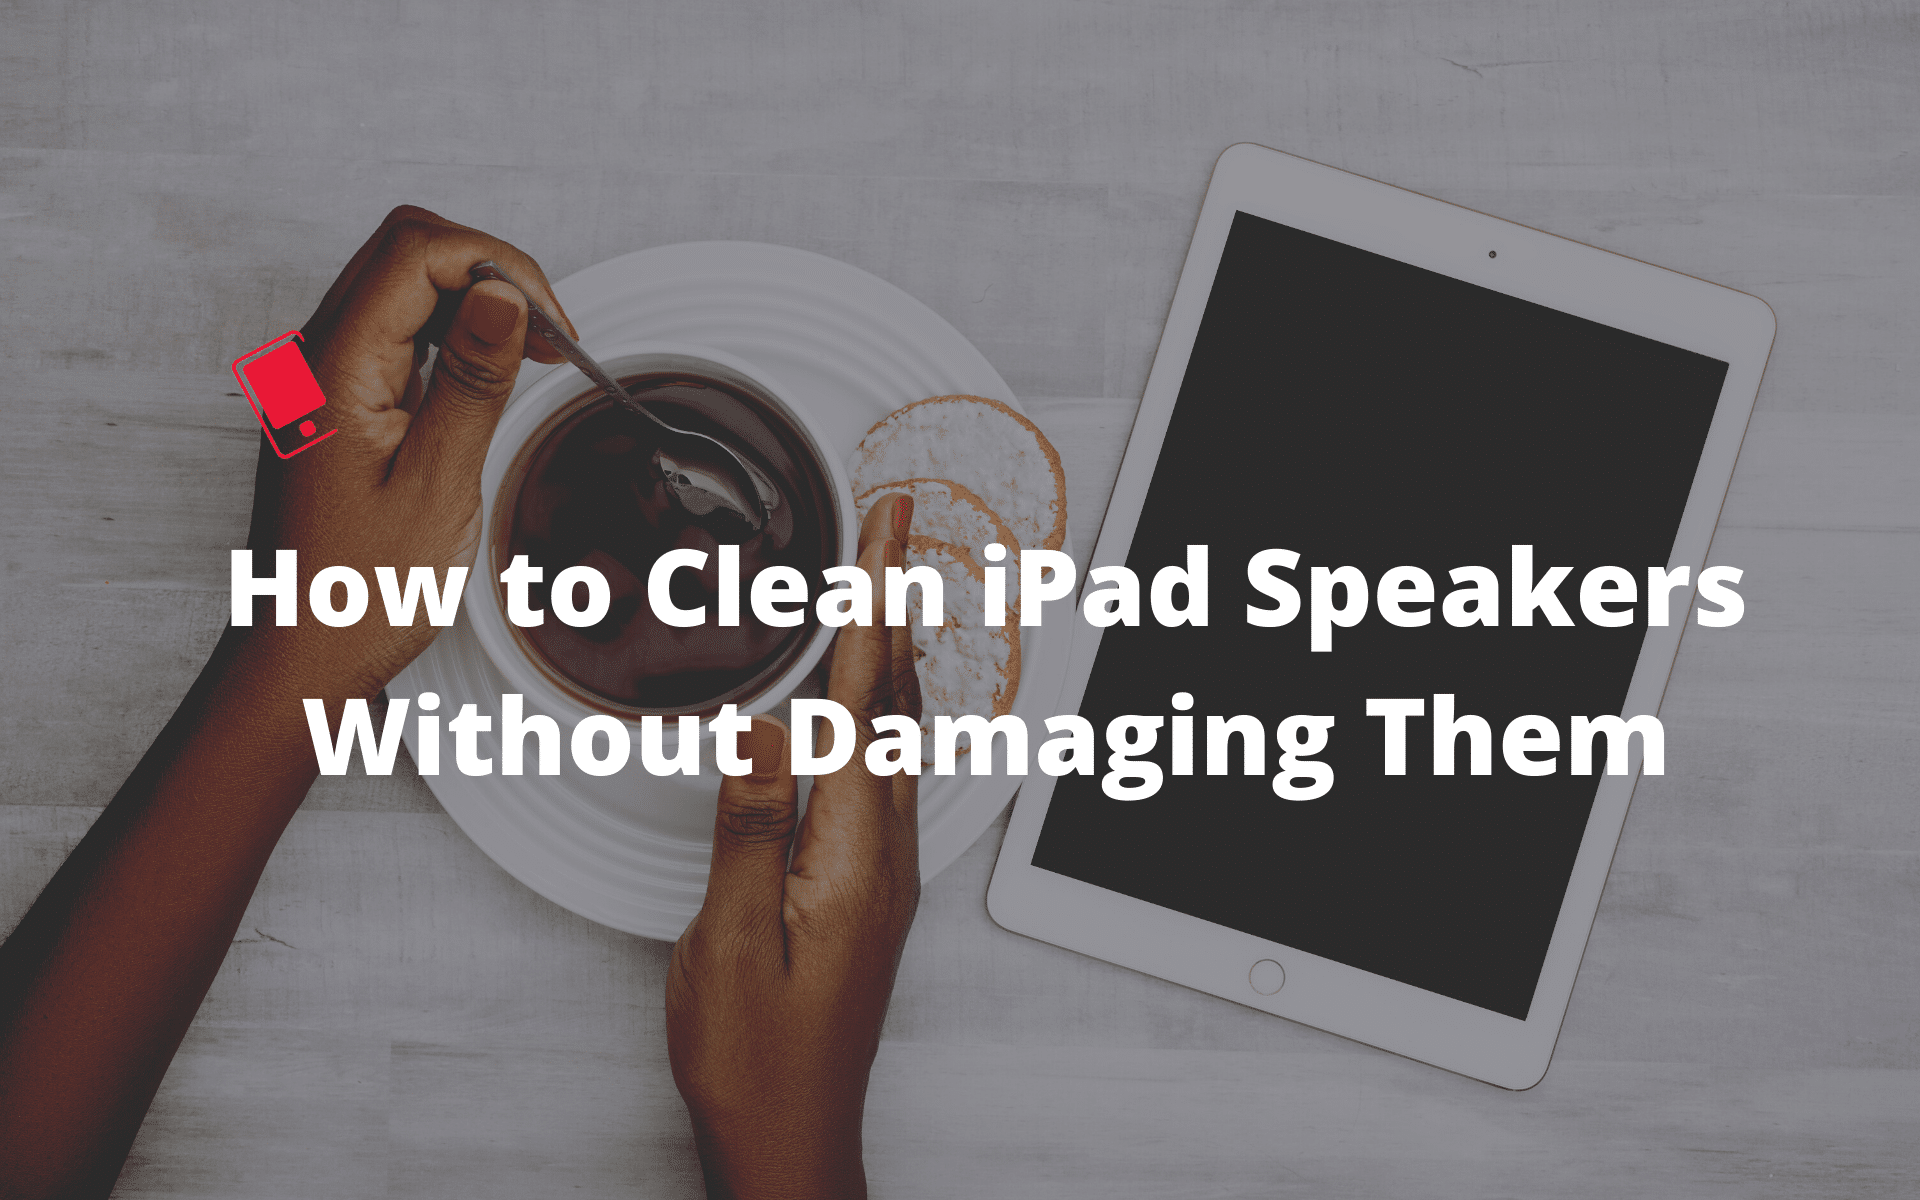 How to clean iPad speakers